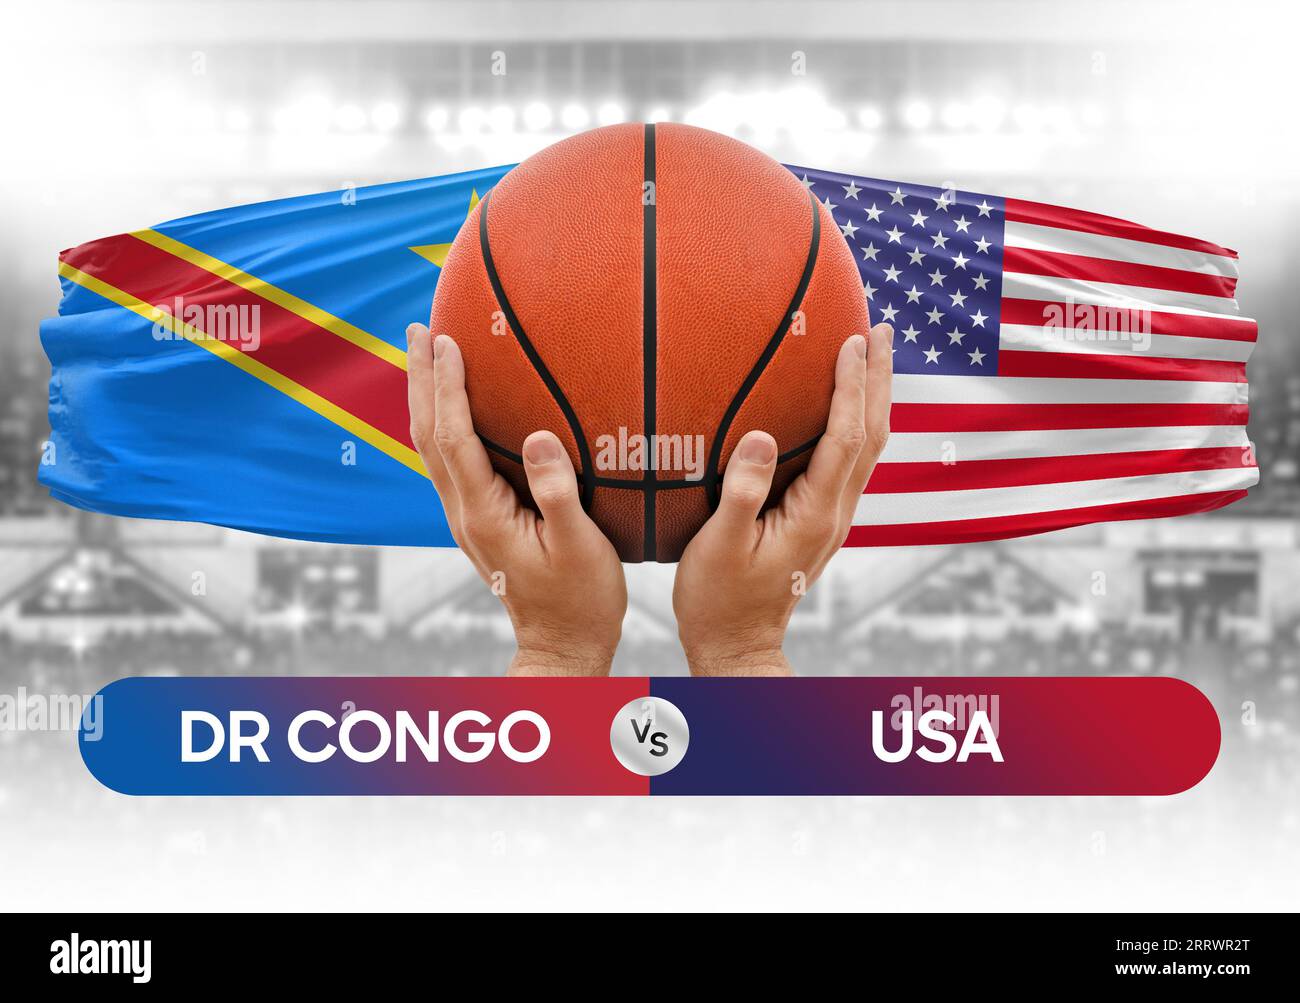 Dr Congo vs USA national basketball teams basket ball match competition cup concept image Stock Photo